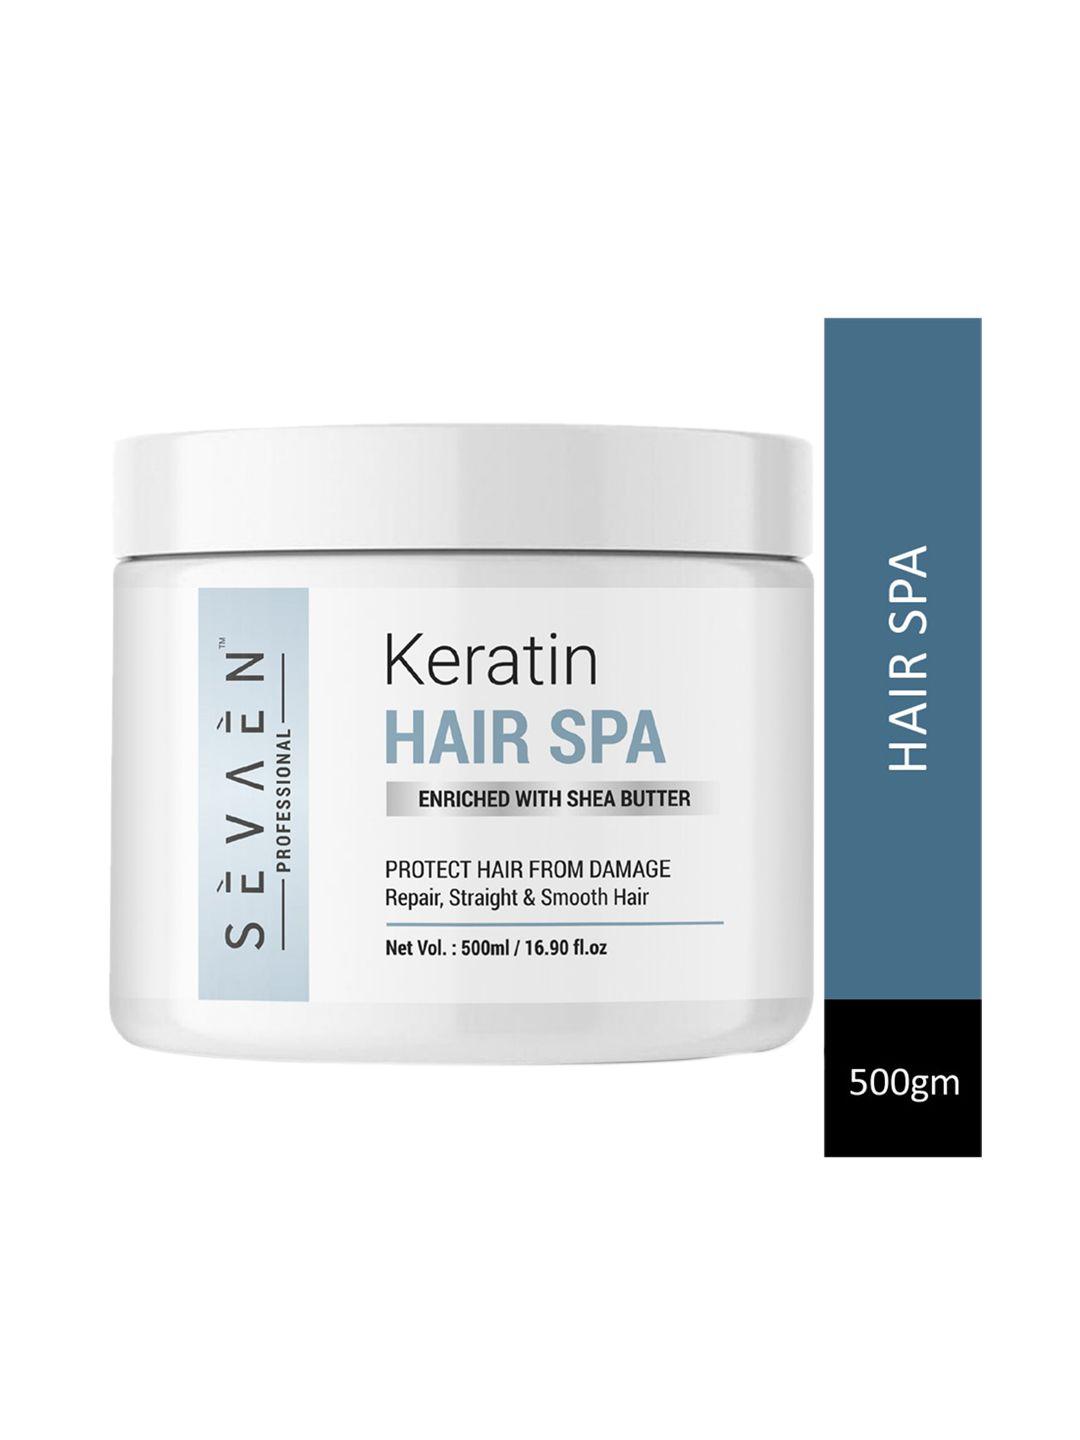 sevaen keratin hair spa cream enriched with shea butter to repair & smooth hair - 500g